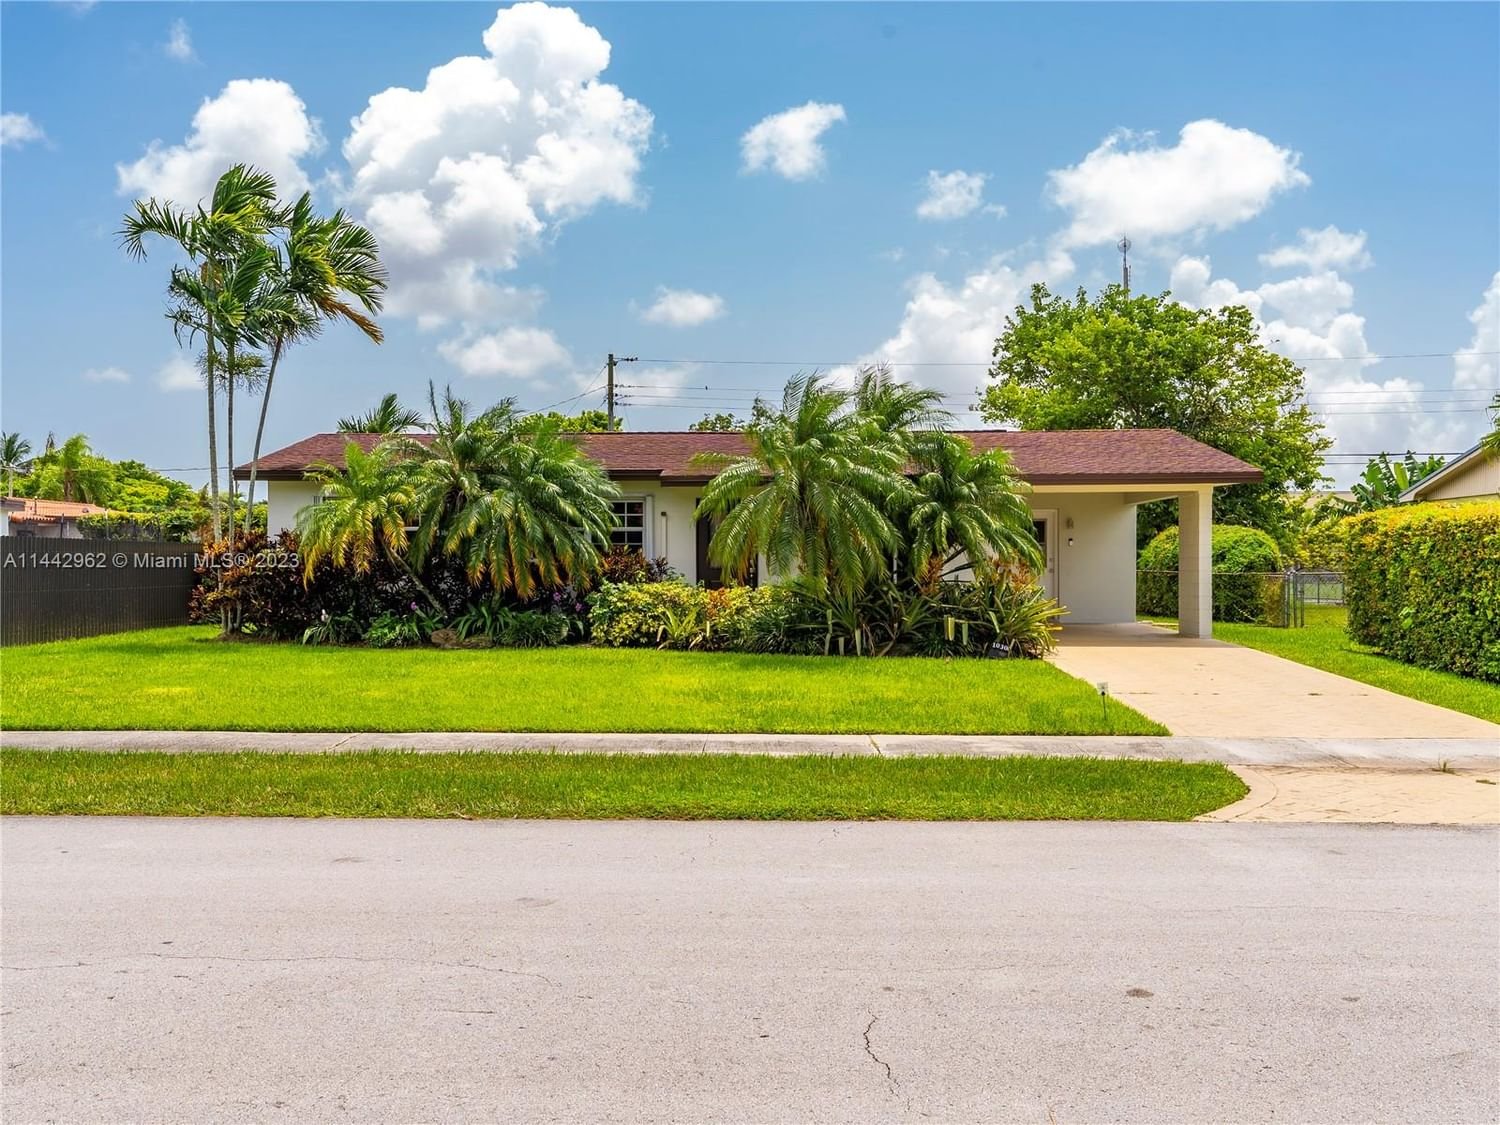 Real estate property located at 10300 45th St, Miami-Dade County, Miami, FL